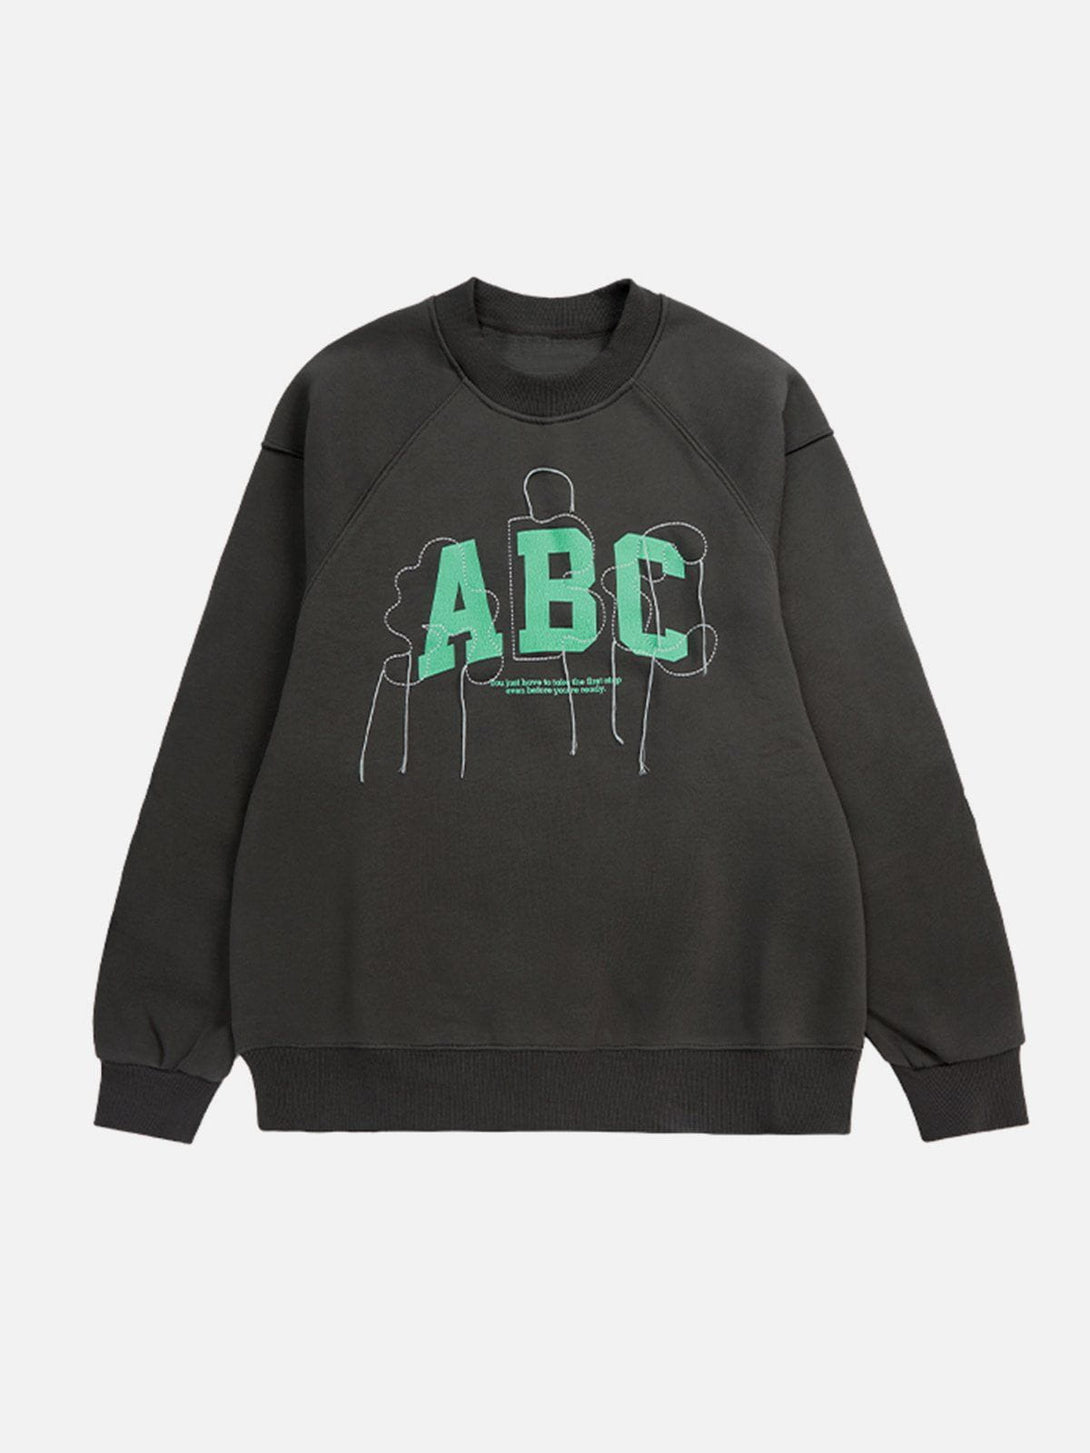 Levefly - "ABC" Embroidery Print Sweatshirt - Streetwear Fashion - levefly.com